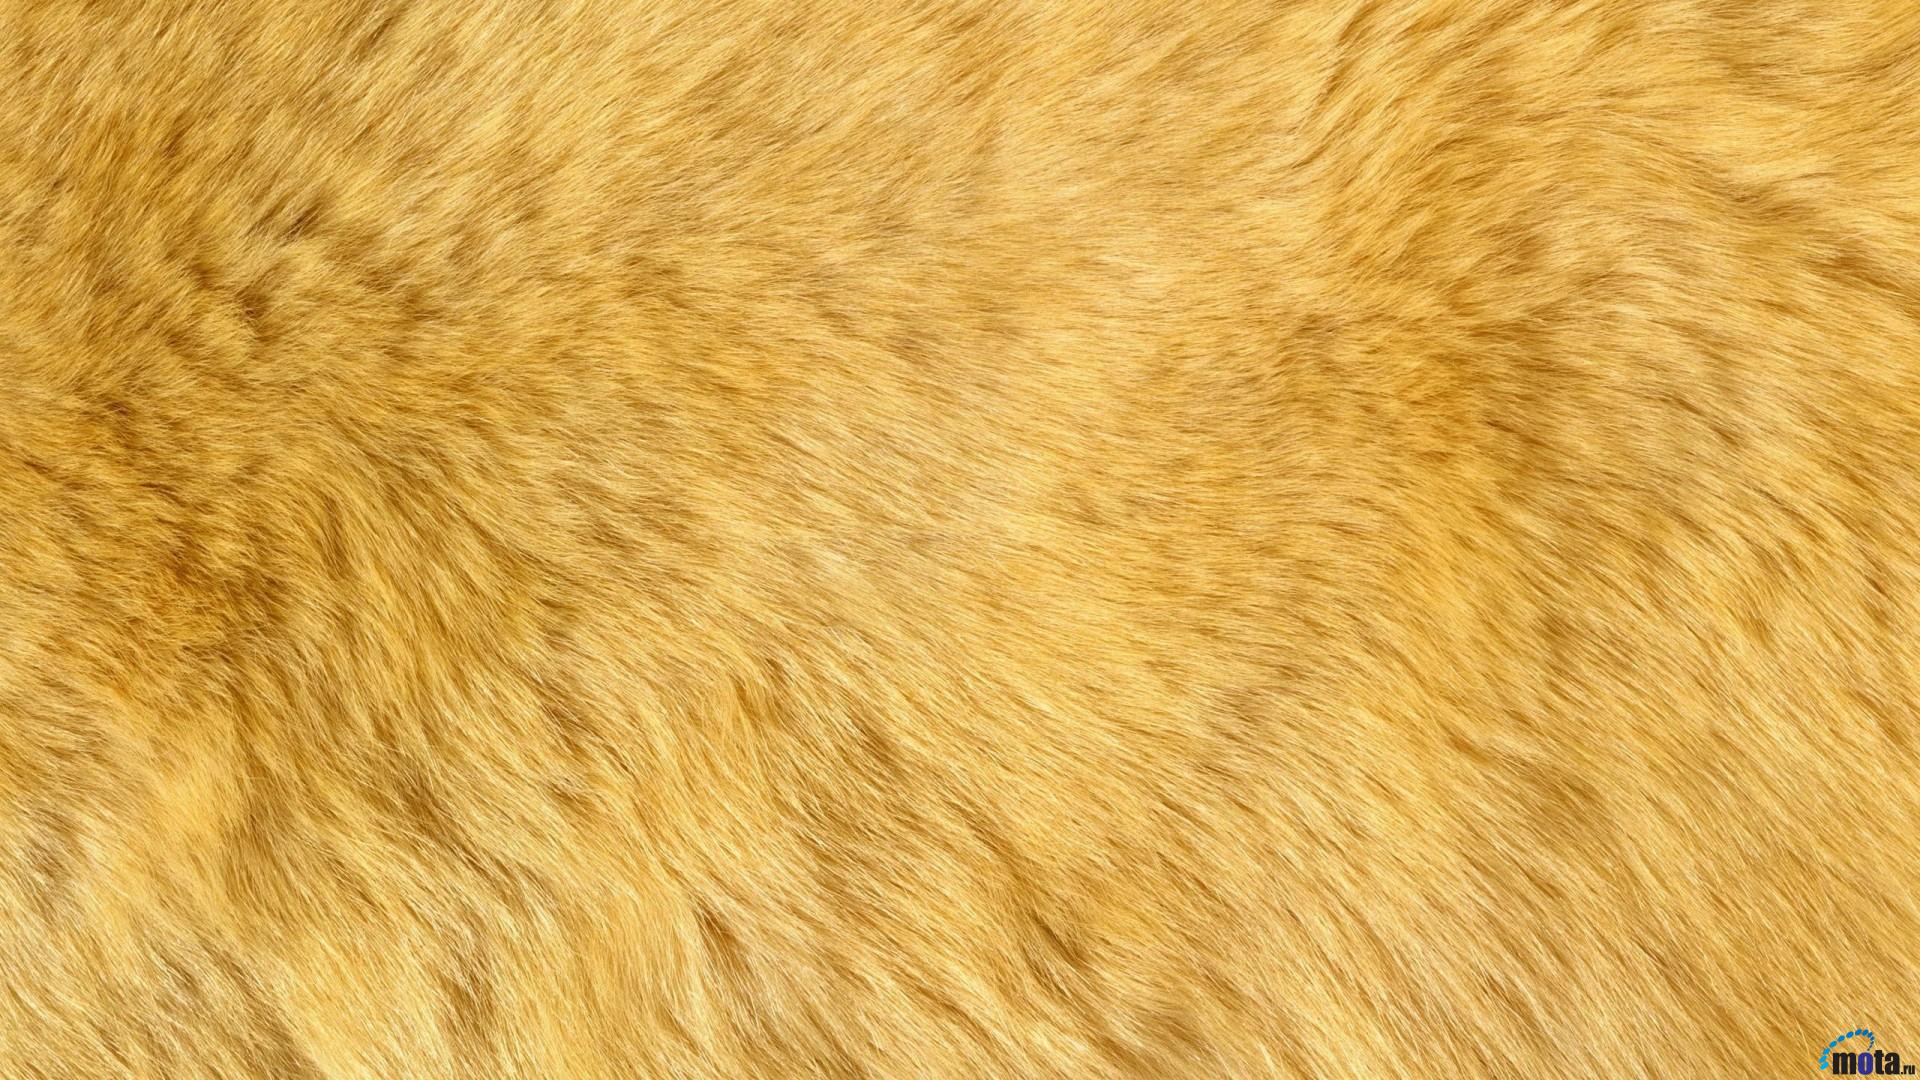 1920x1080 Free Download Download Wallpaper Natural Animal Fur 1920 X